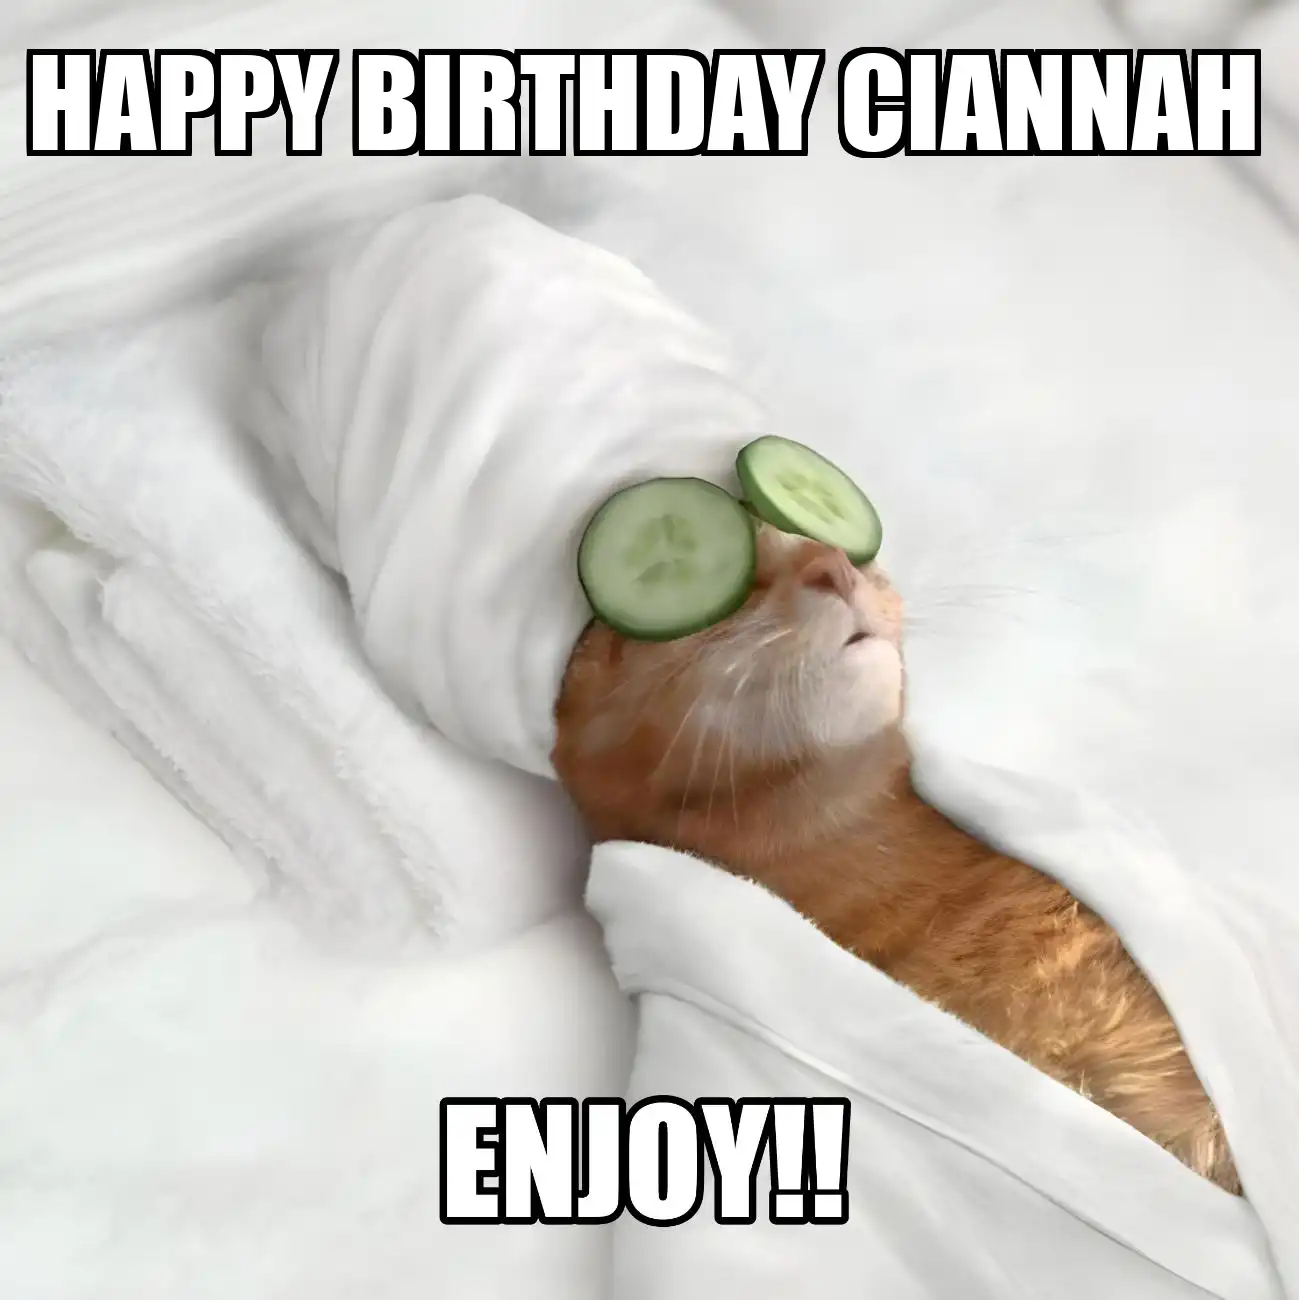 Happy Birthday Ciannah Enjoy Cat Meme